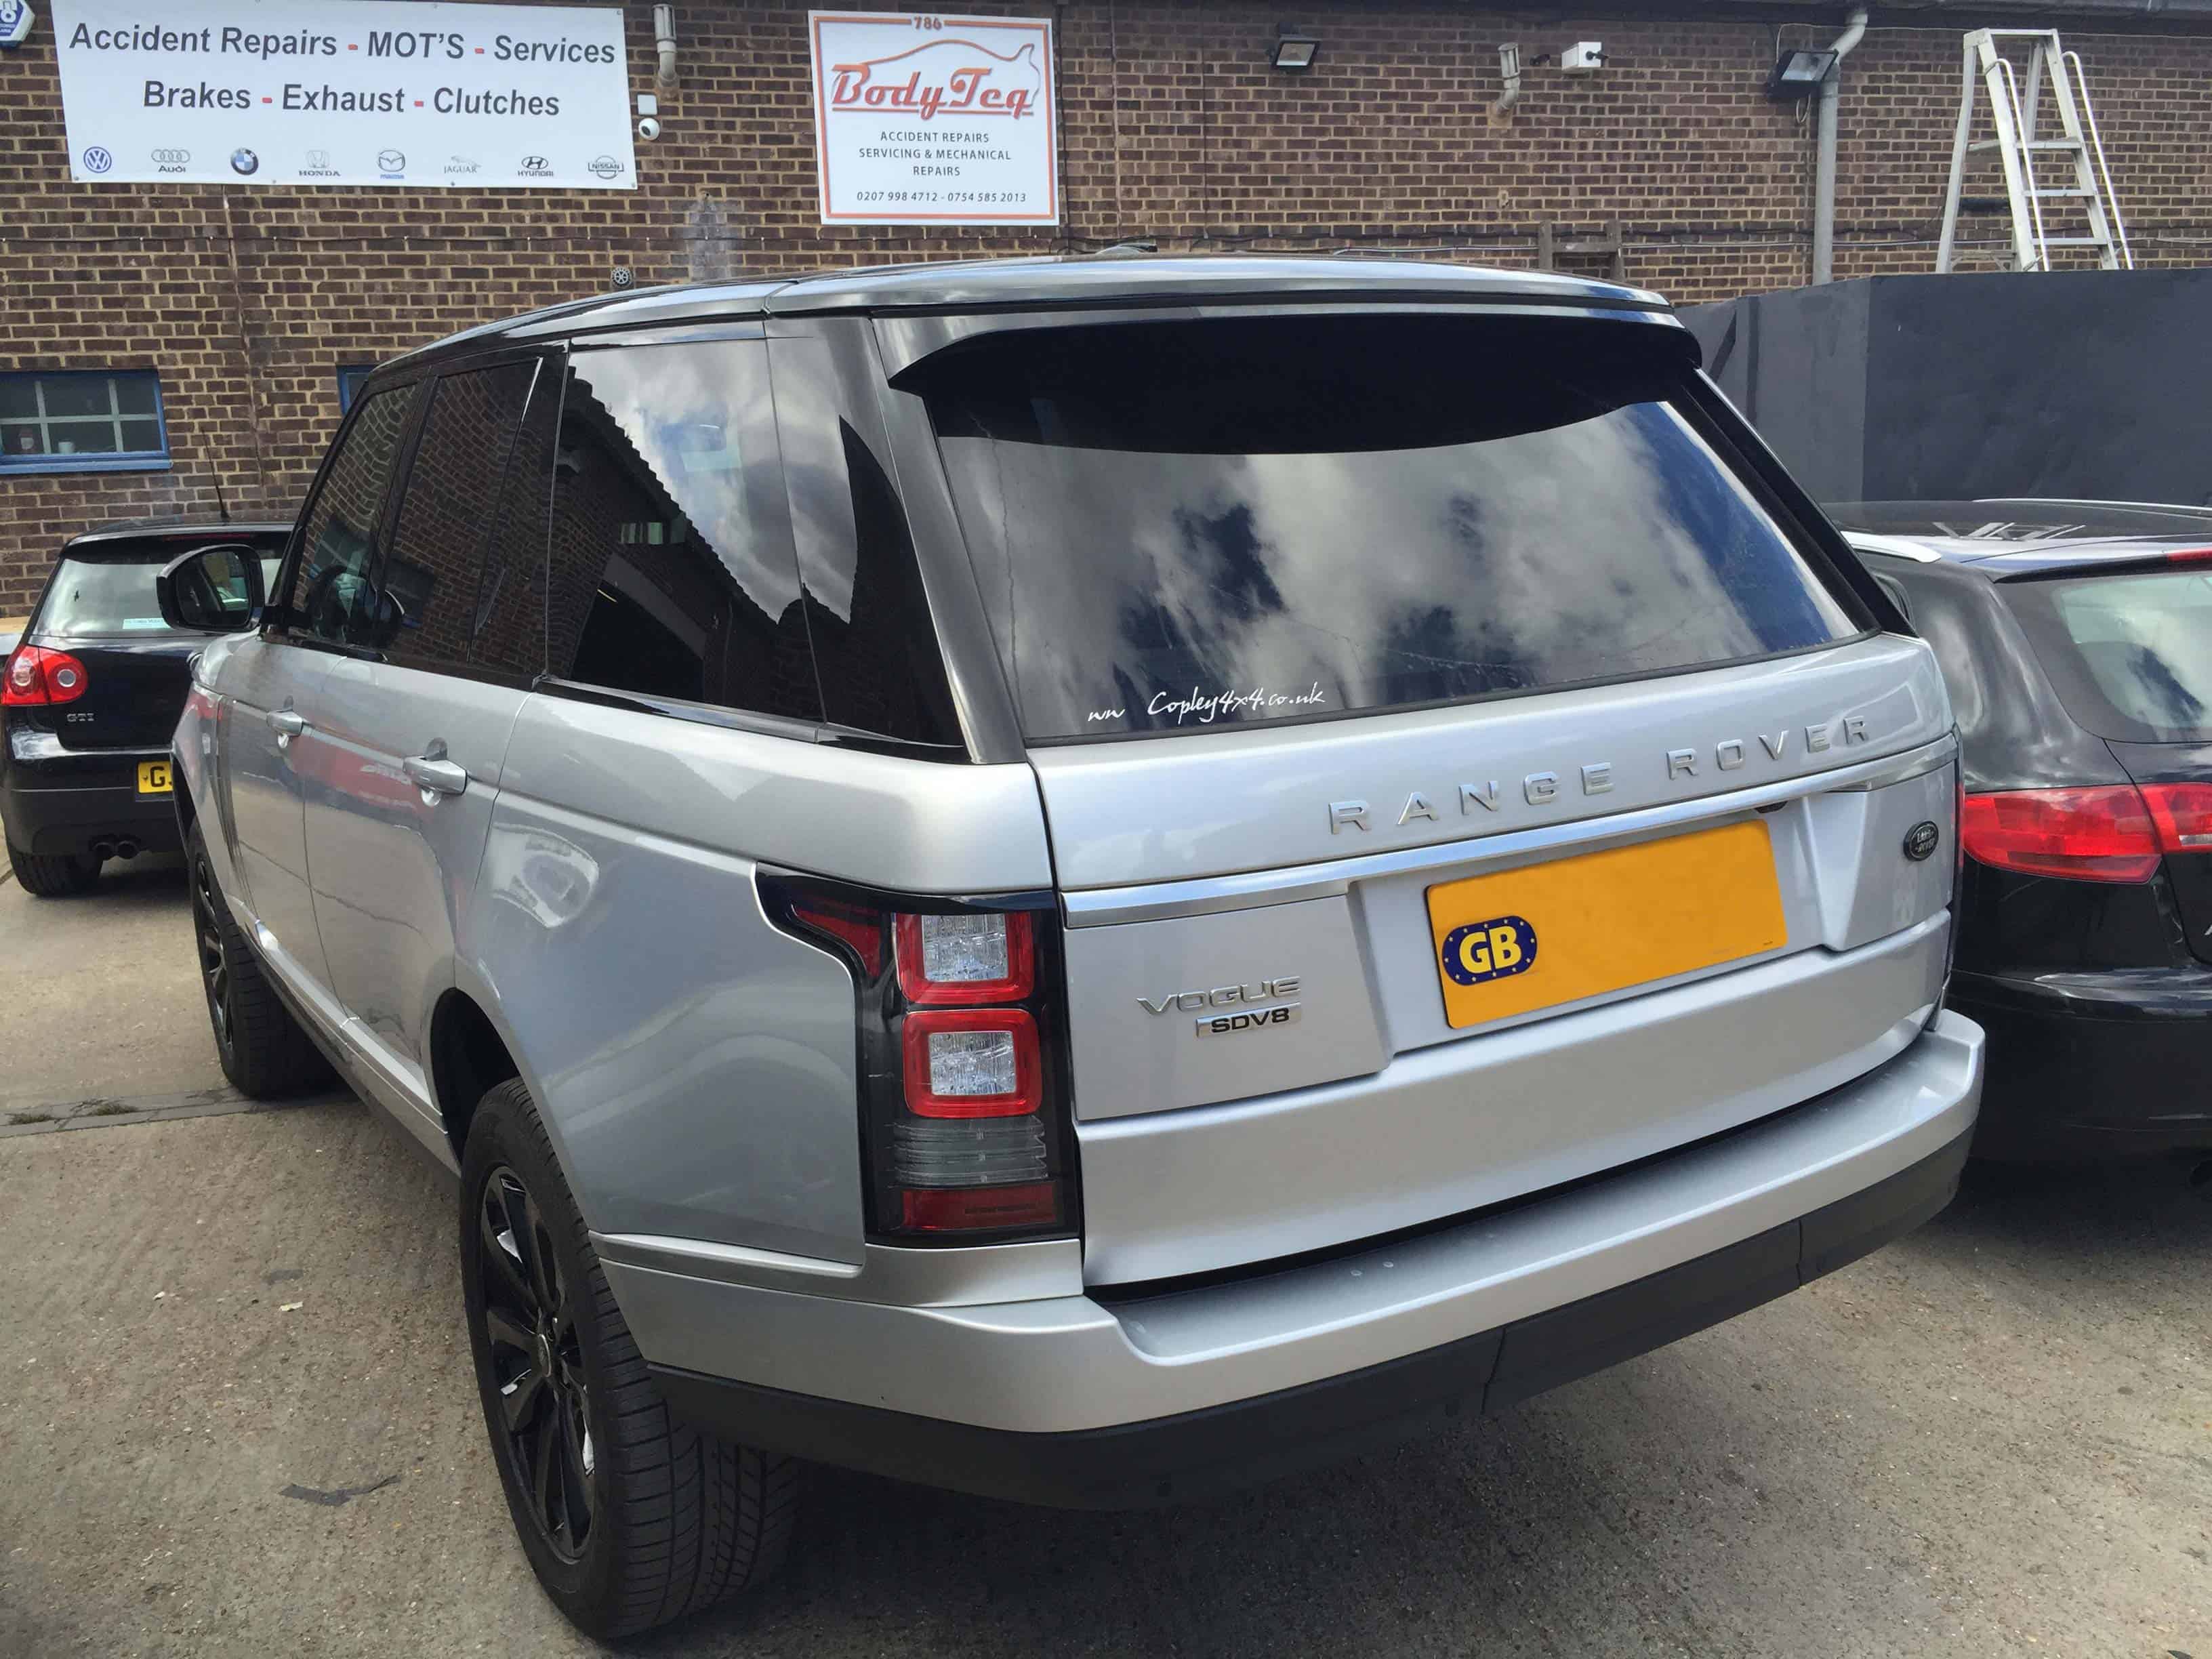 Range Rover Vogue Silver To Black Roof Respray Bodyteq